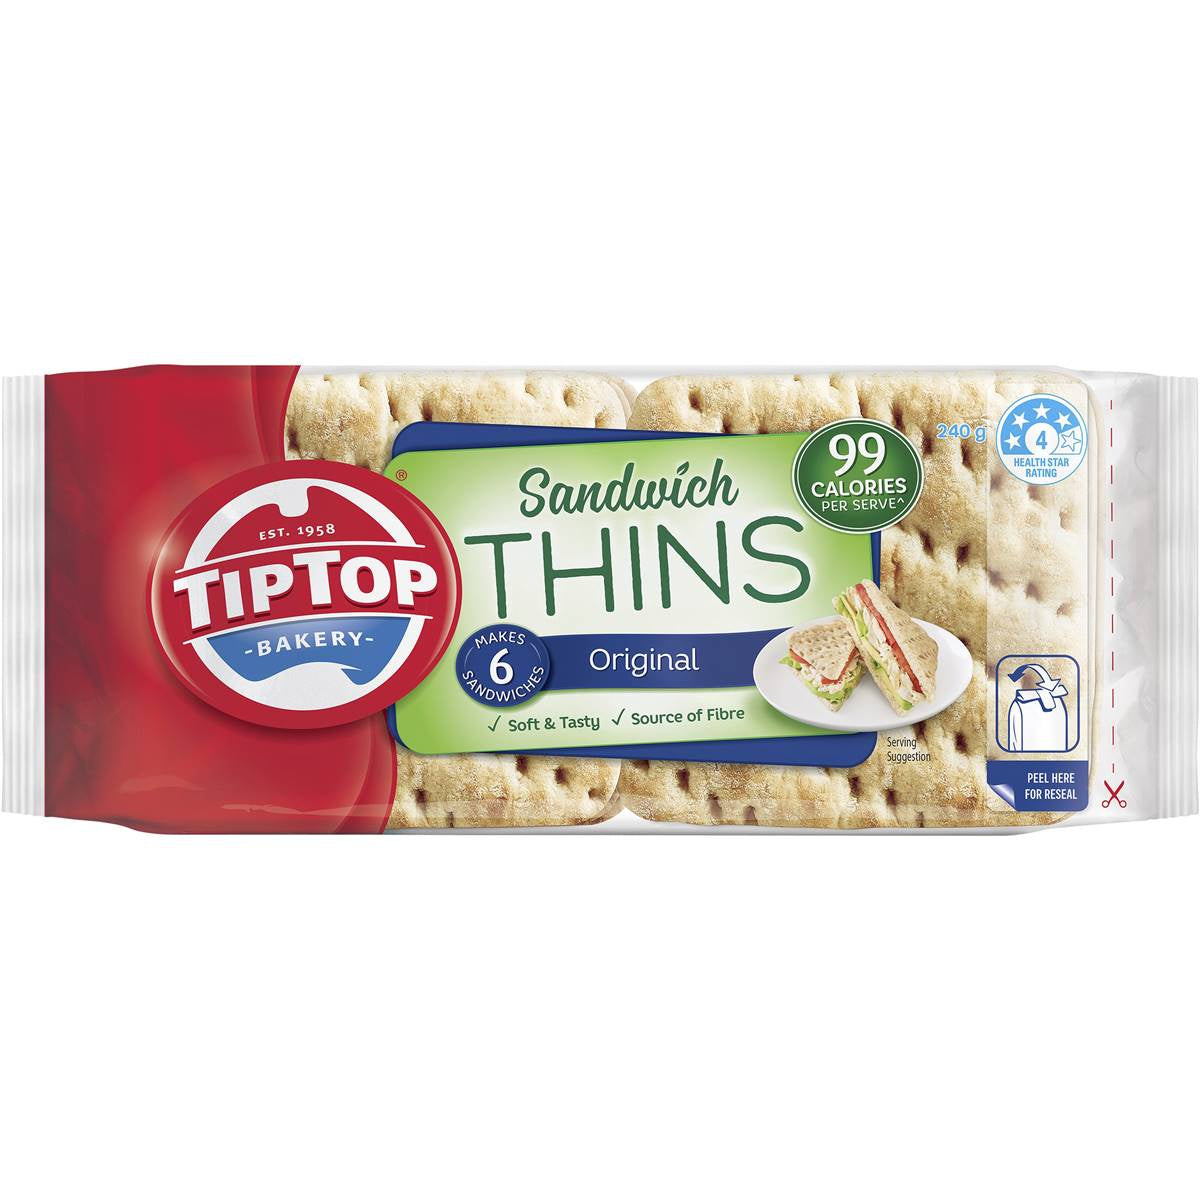 Tip Top Sandwich Thins Original 6pk